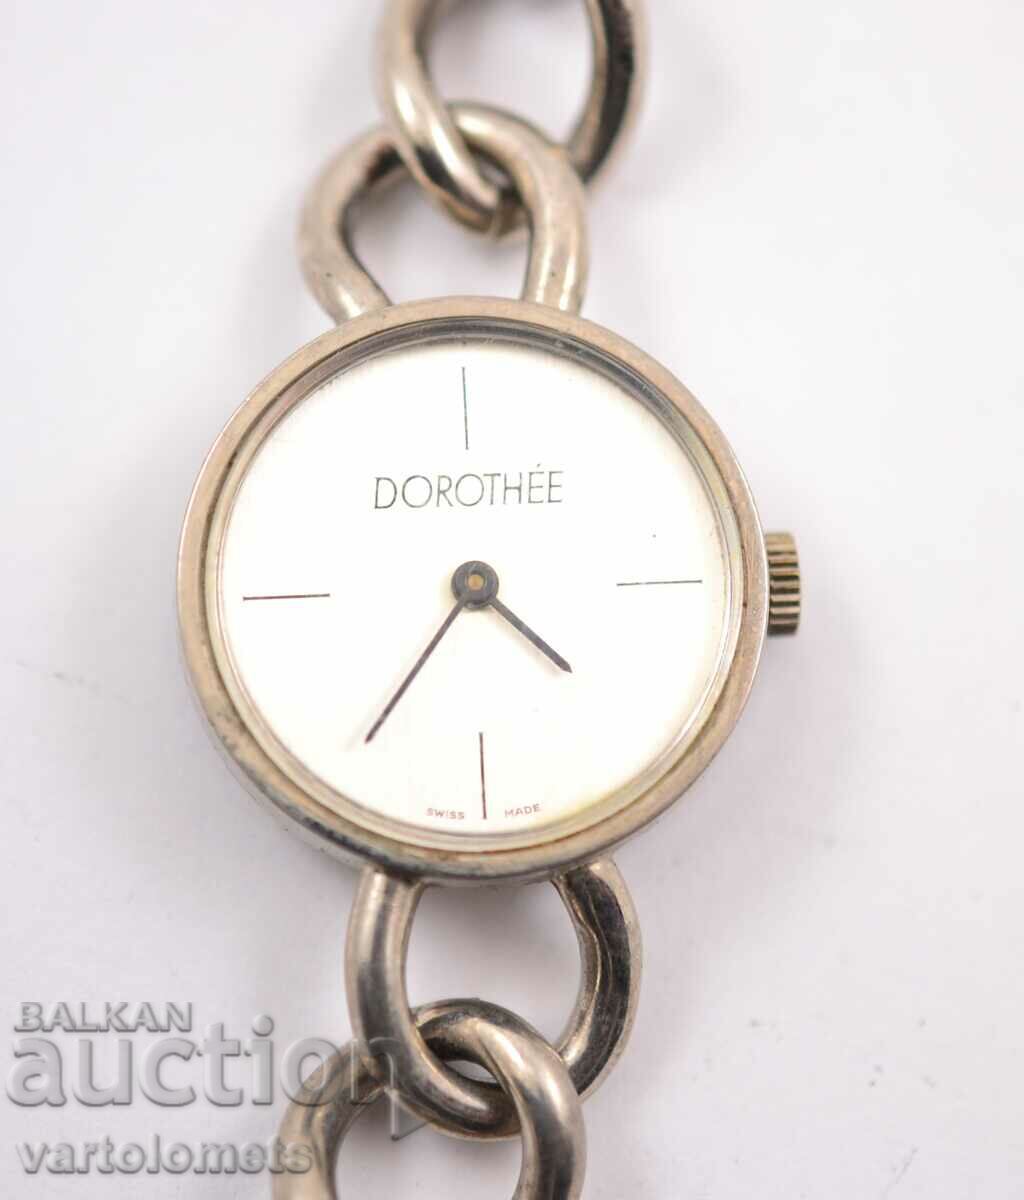 Women's watch DOROTHEE Swiss made - working